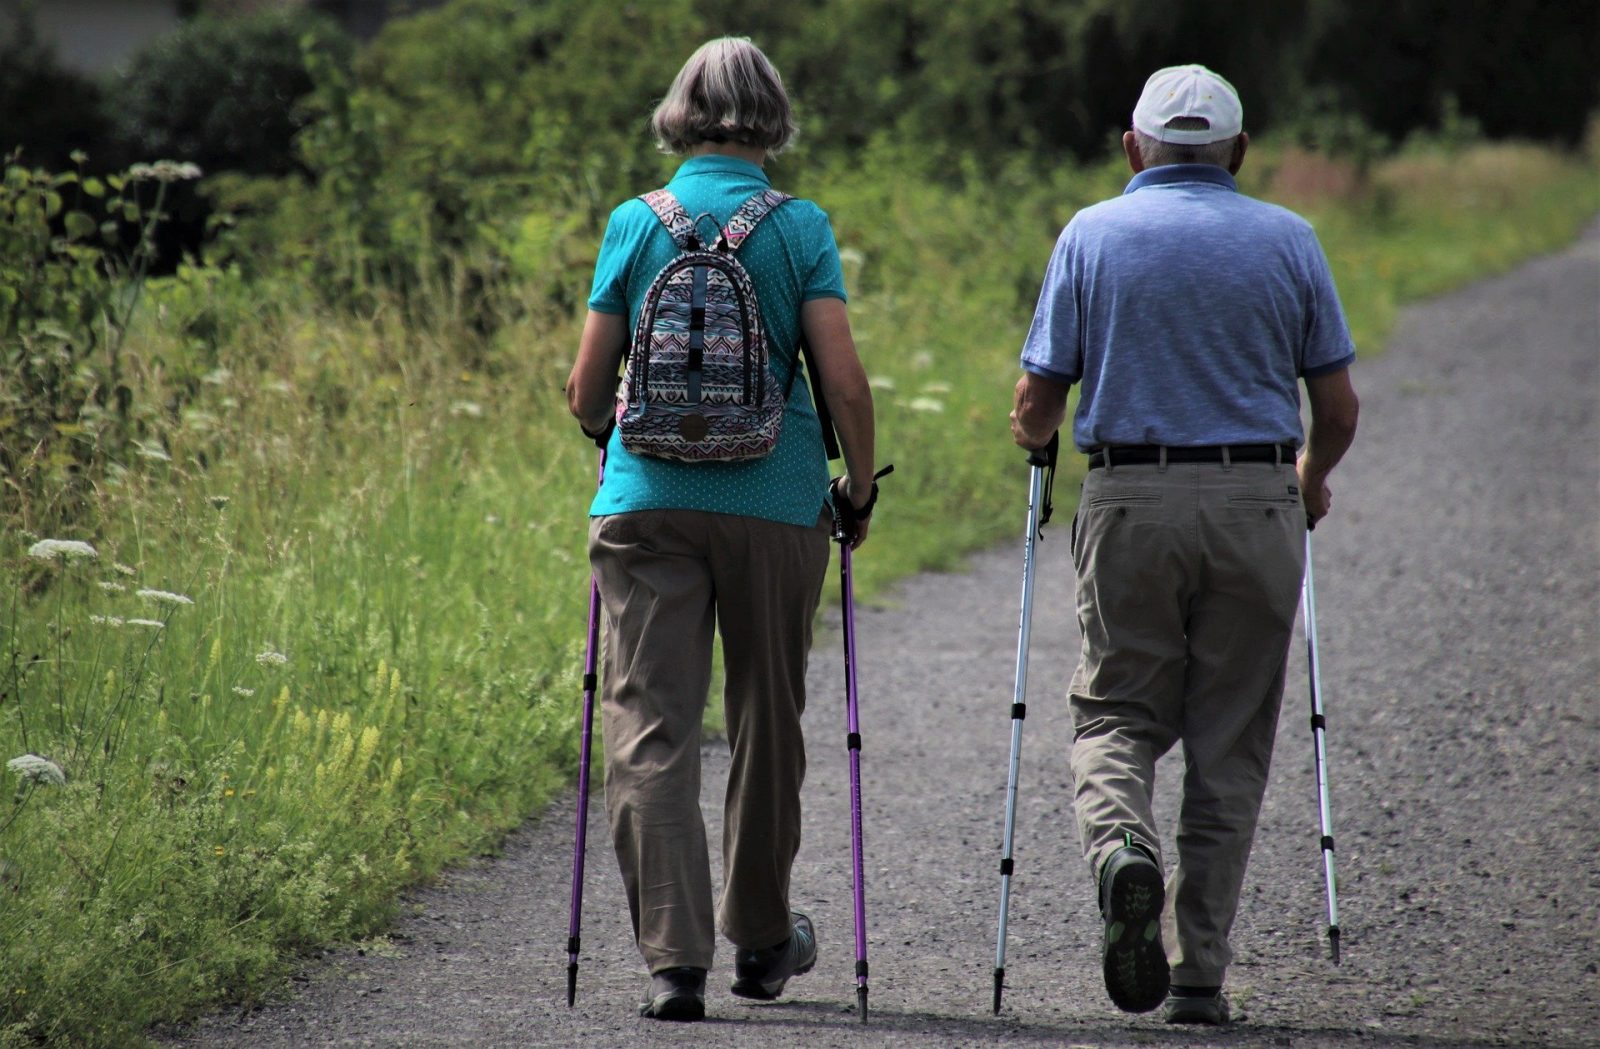 Study focus on seniors leaving hospital care